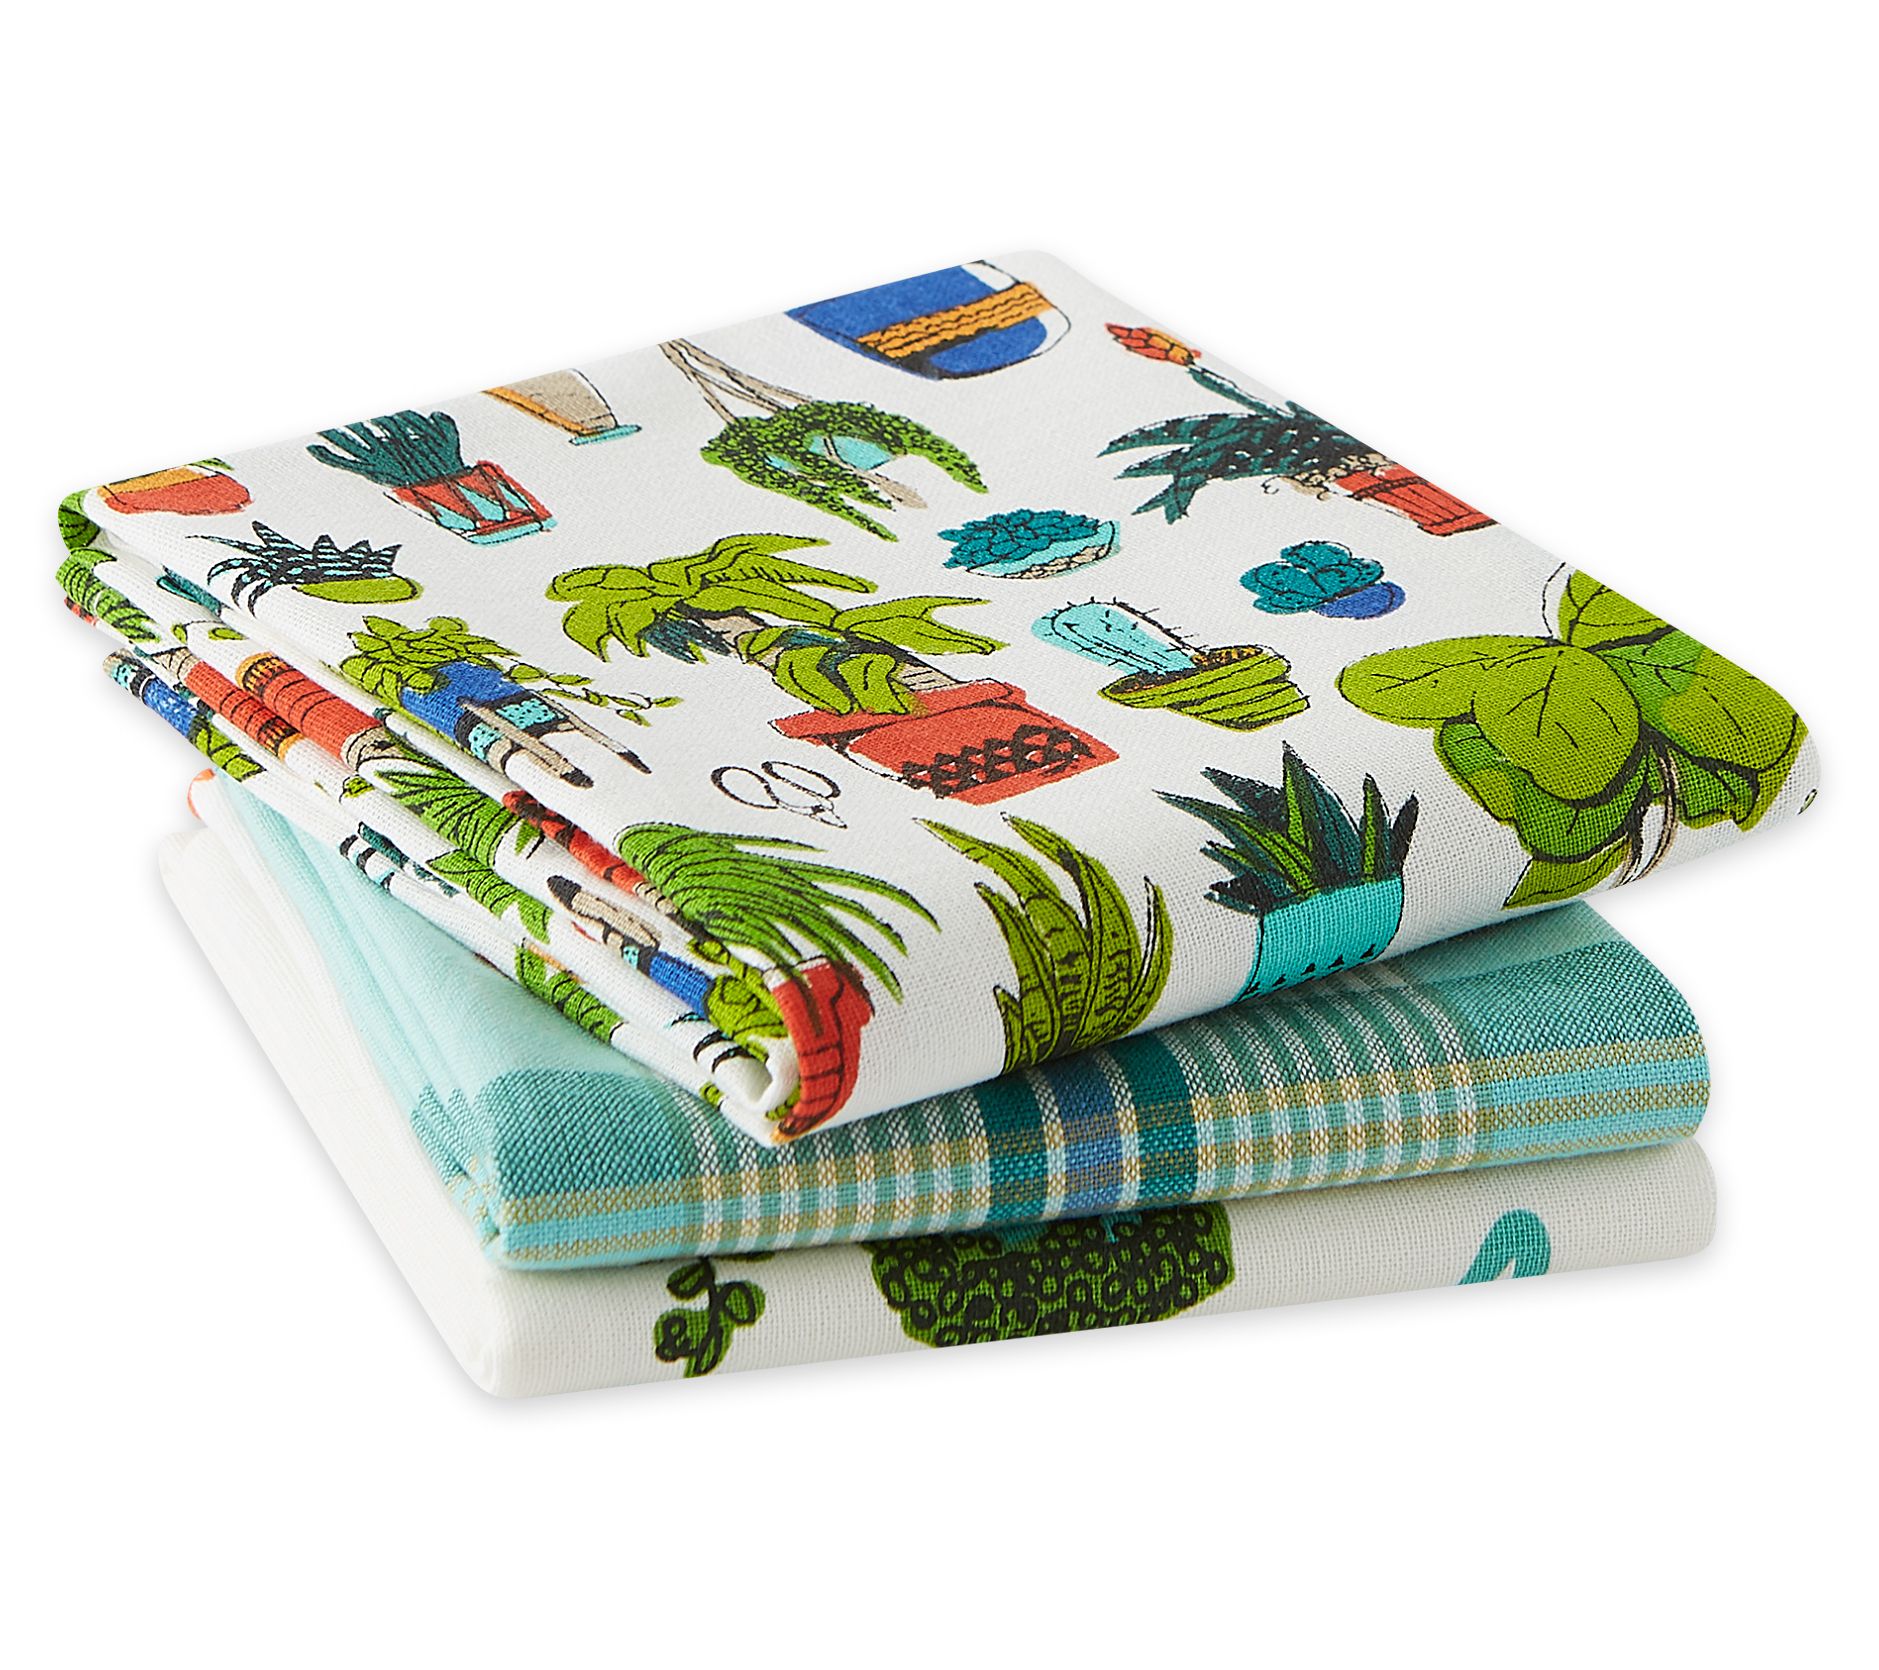 Design Imports Farm to Table Embellished Kitchen Towel Set of 4